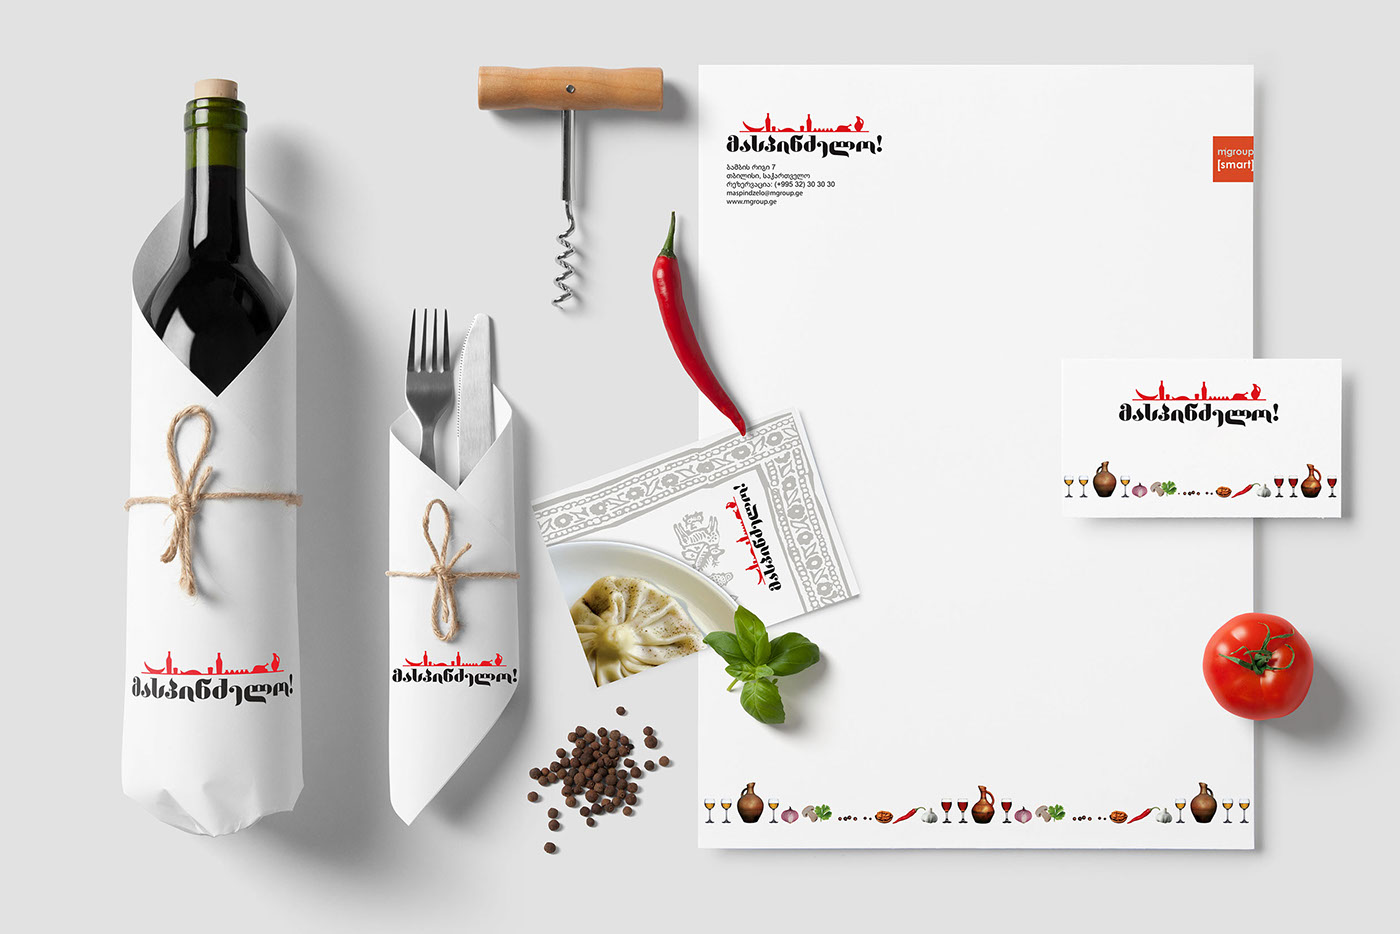 branding.ge Maka chichinadze maspindzelo logo corporate style restaurant მასპინძელო